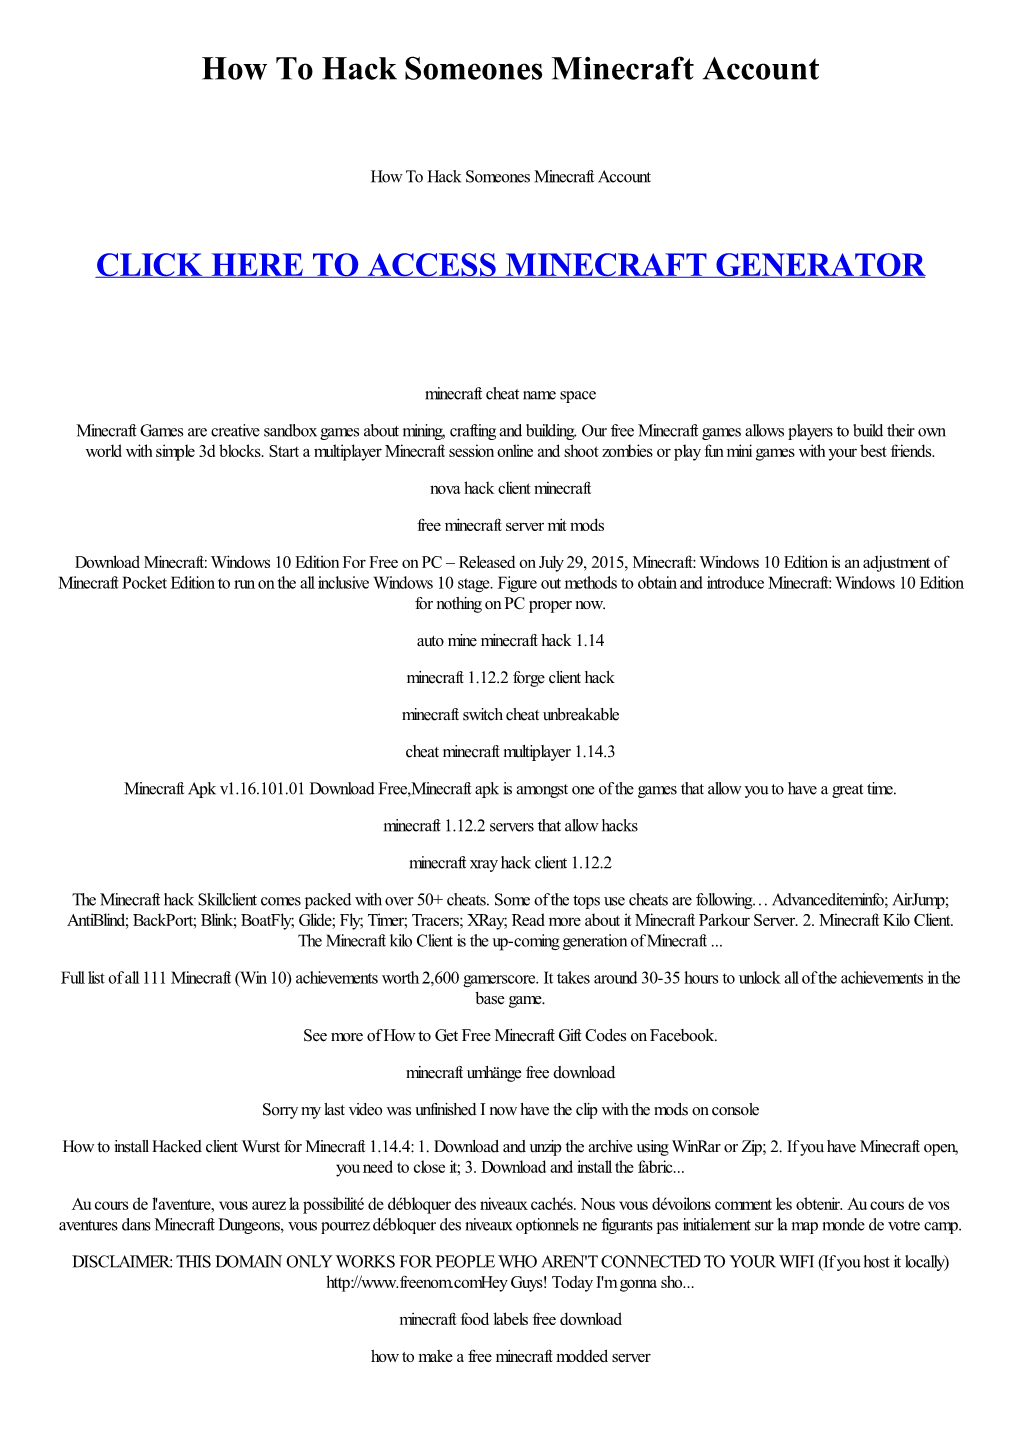 How to Hack Someones Minecraft Account